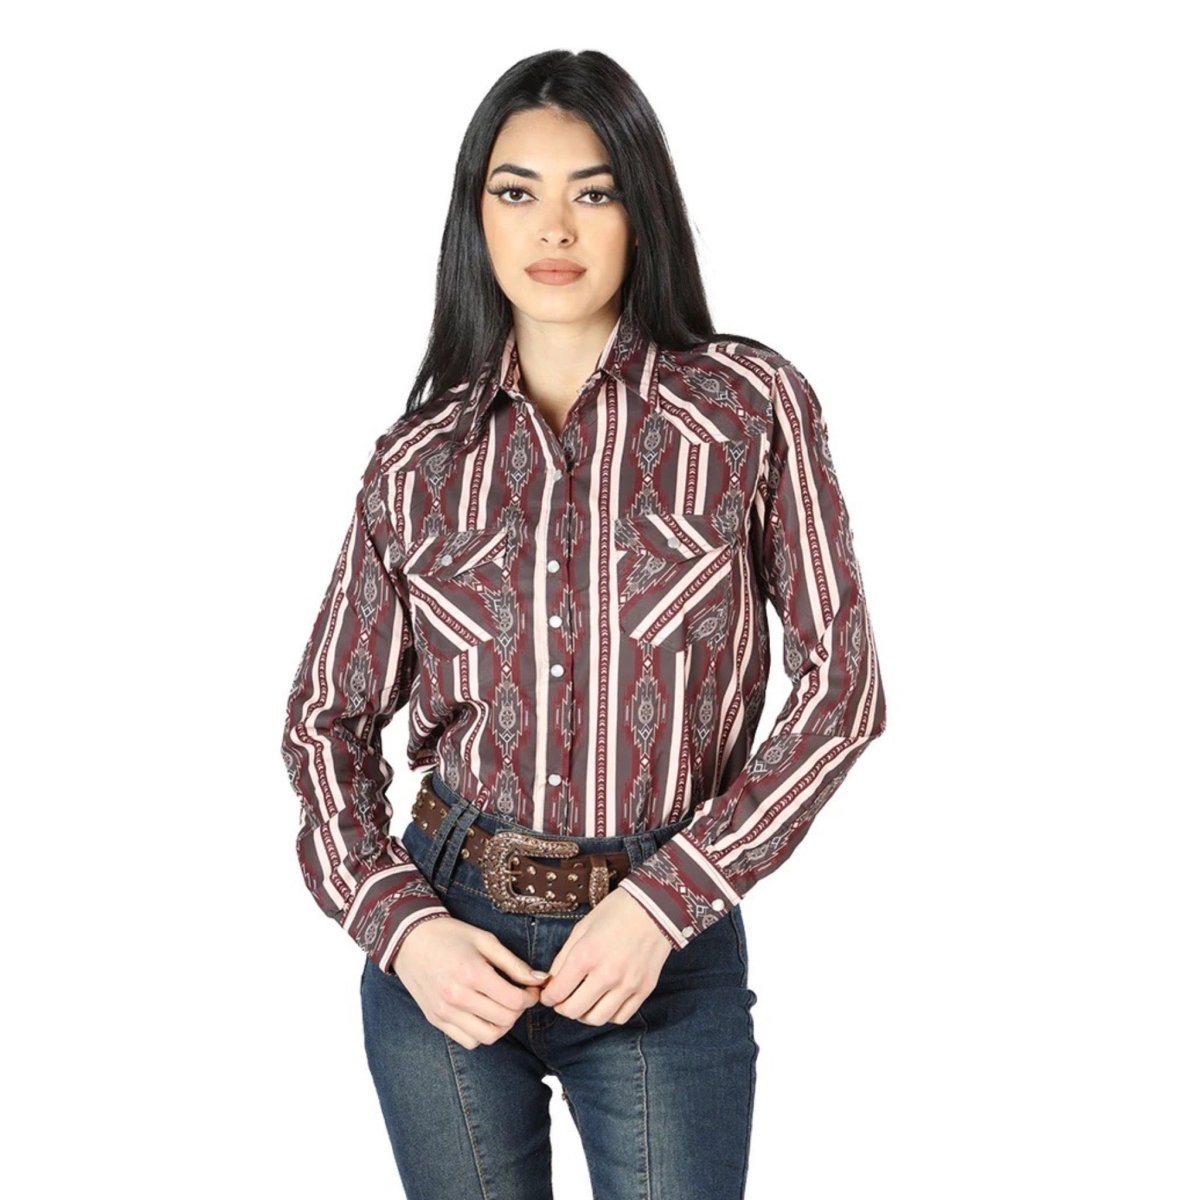 Fycar Gilet Cowboy Mucca Donna - Giacche, Gilet, Camicie e t-Shirt